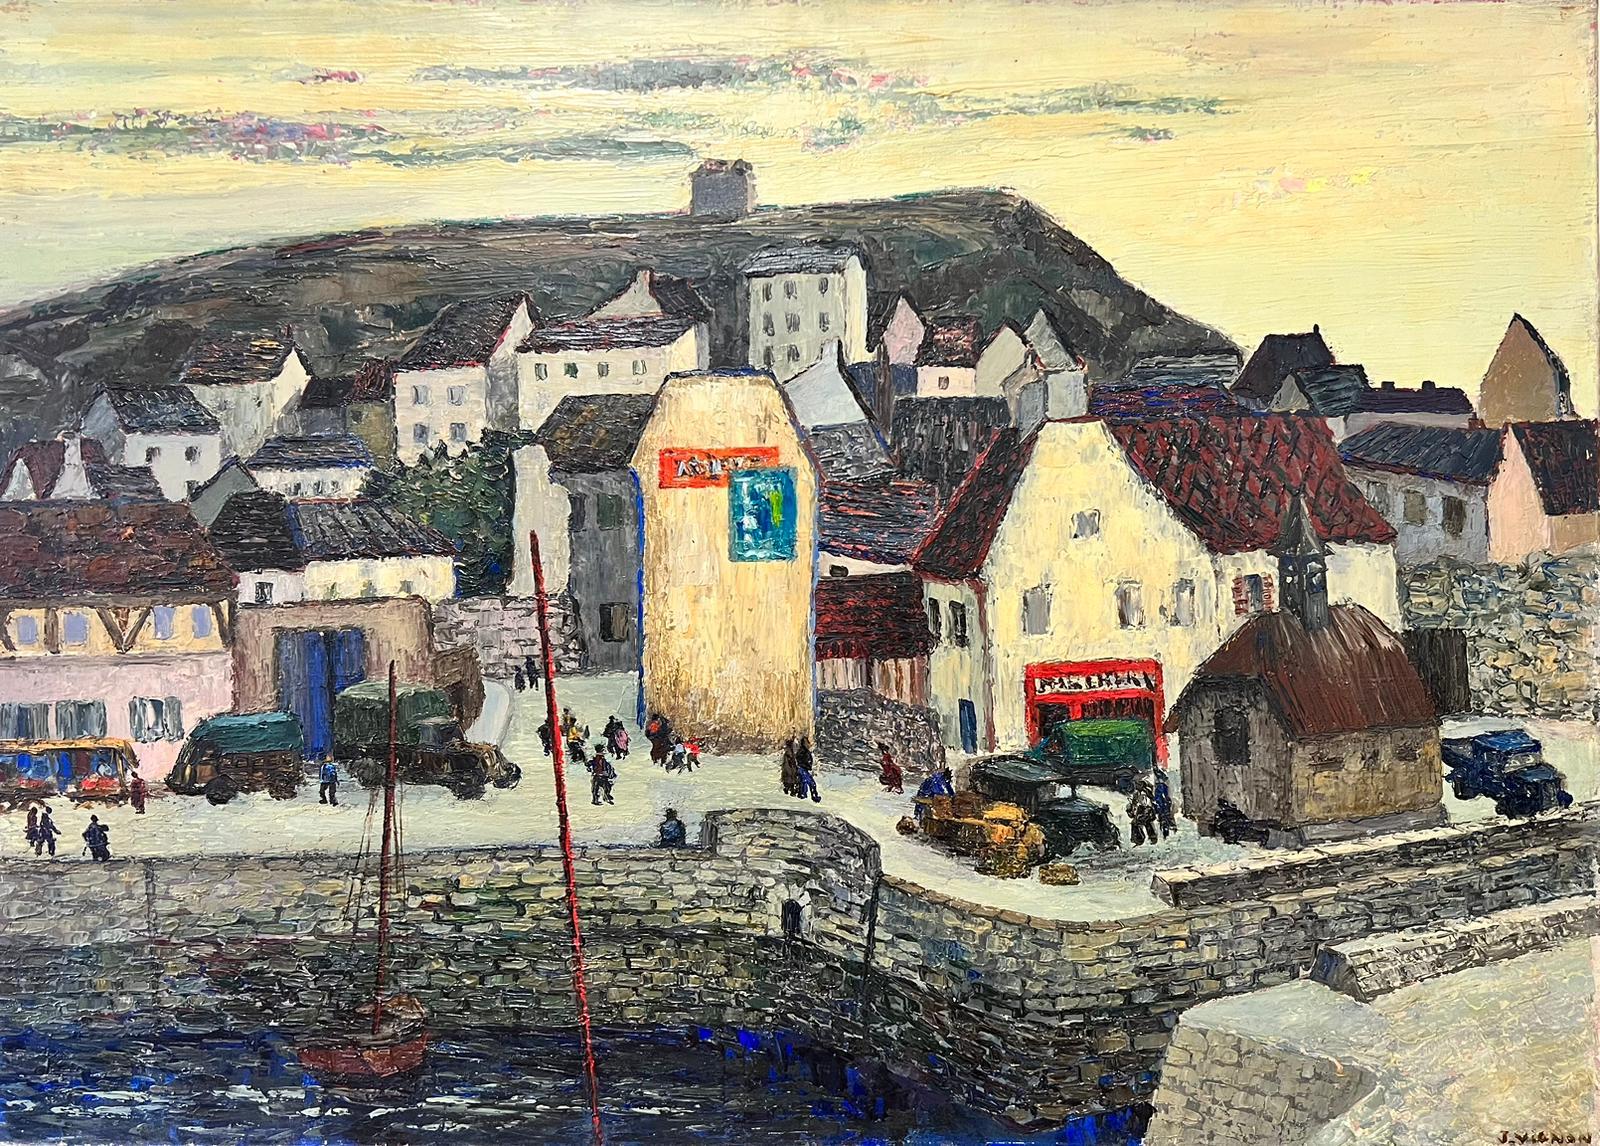 Port en Bessin Normandy Coastline Large 1960’s French Post Impressionist Oil